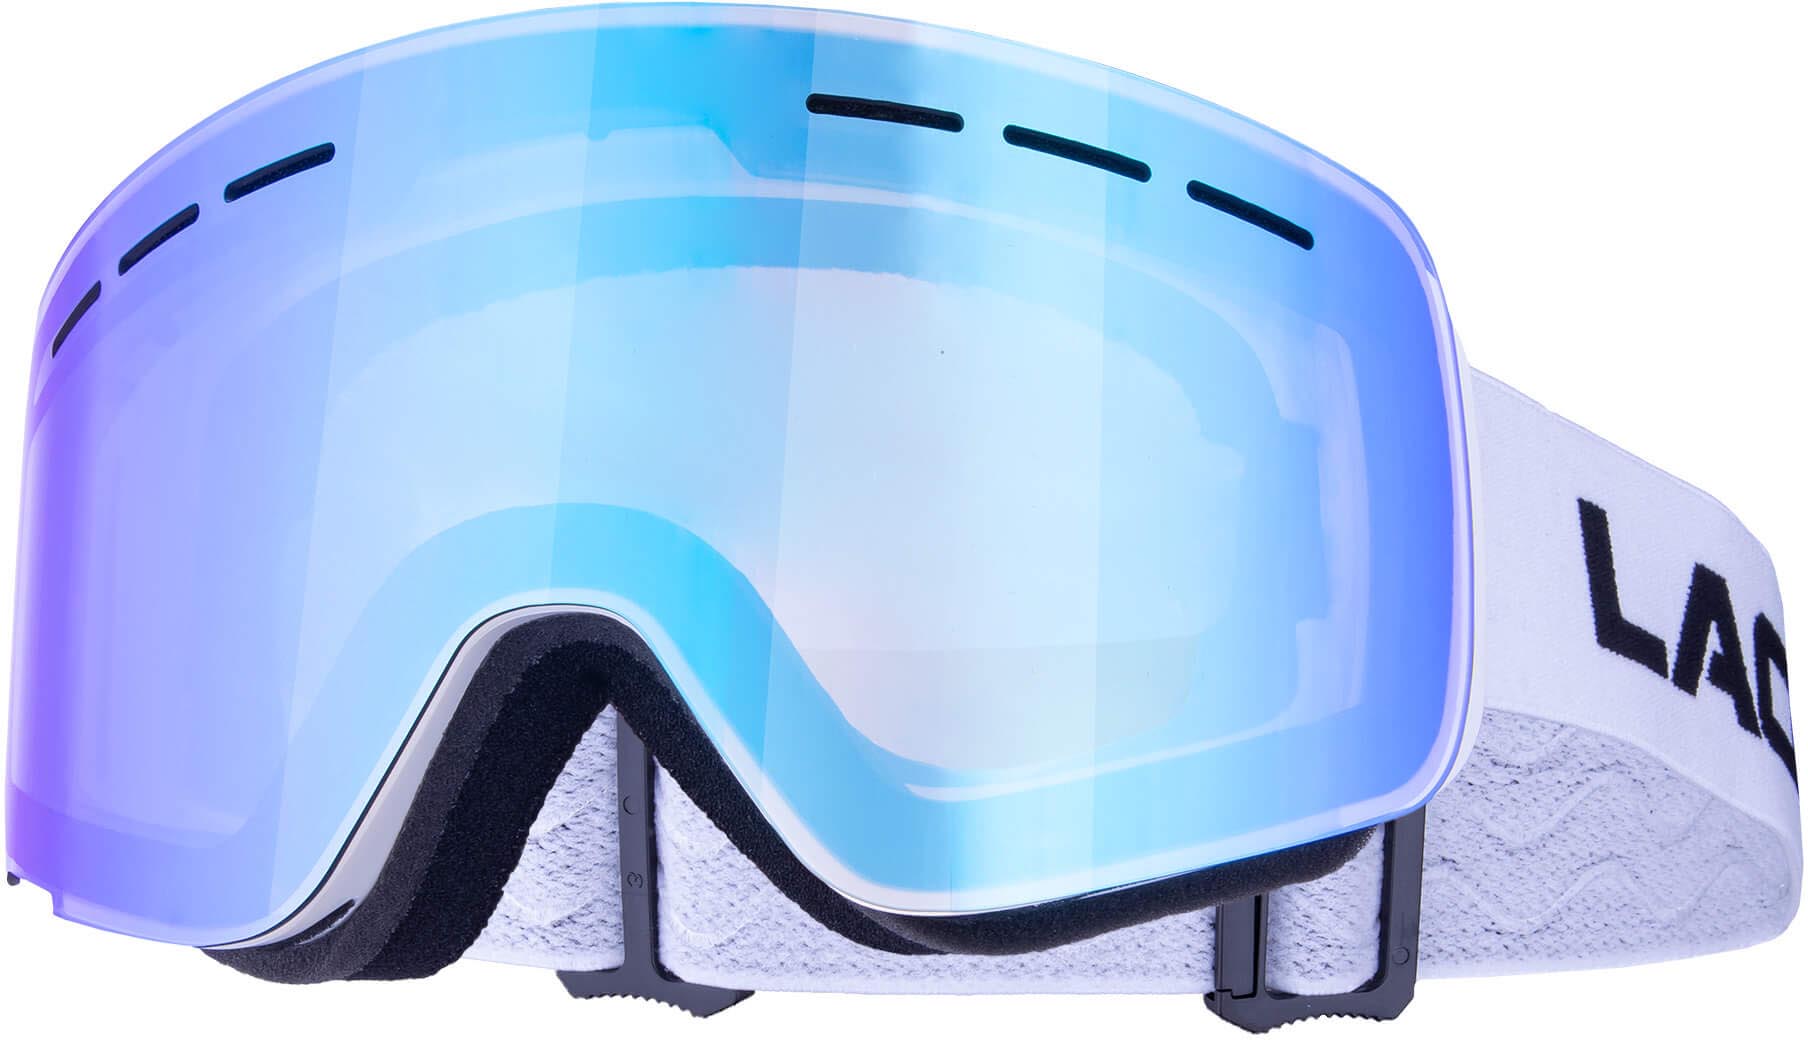 Fotochromatické lyžařské brýle